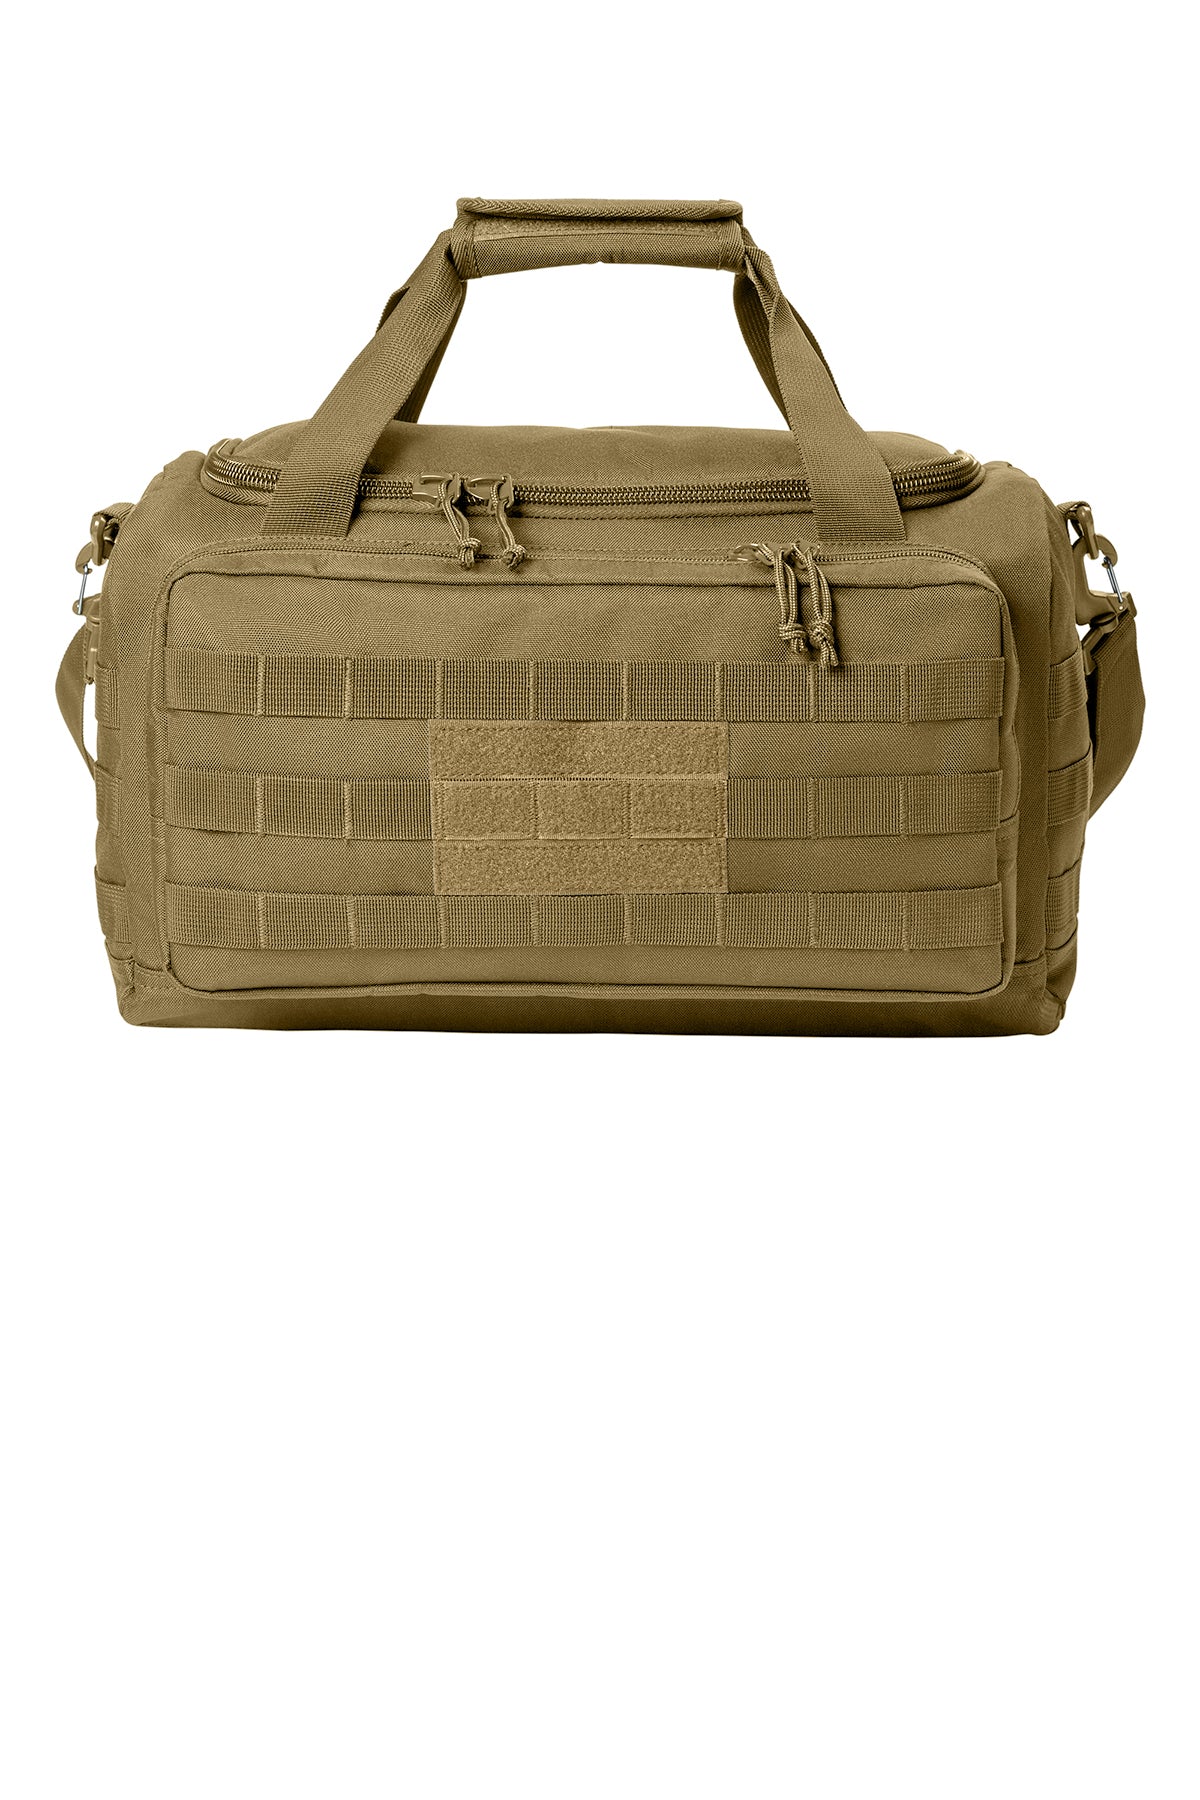 CornerStone Tactical Gear Bag